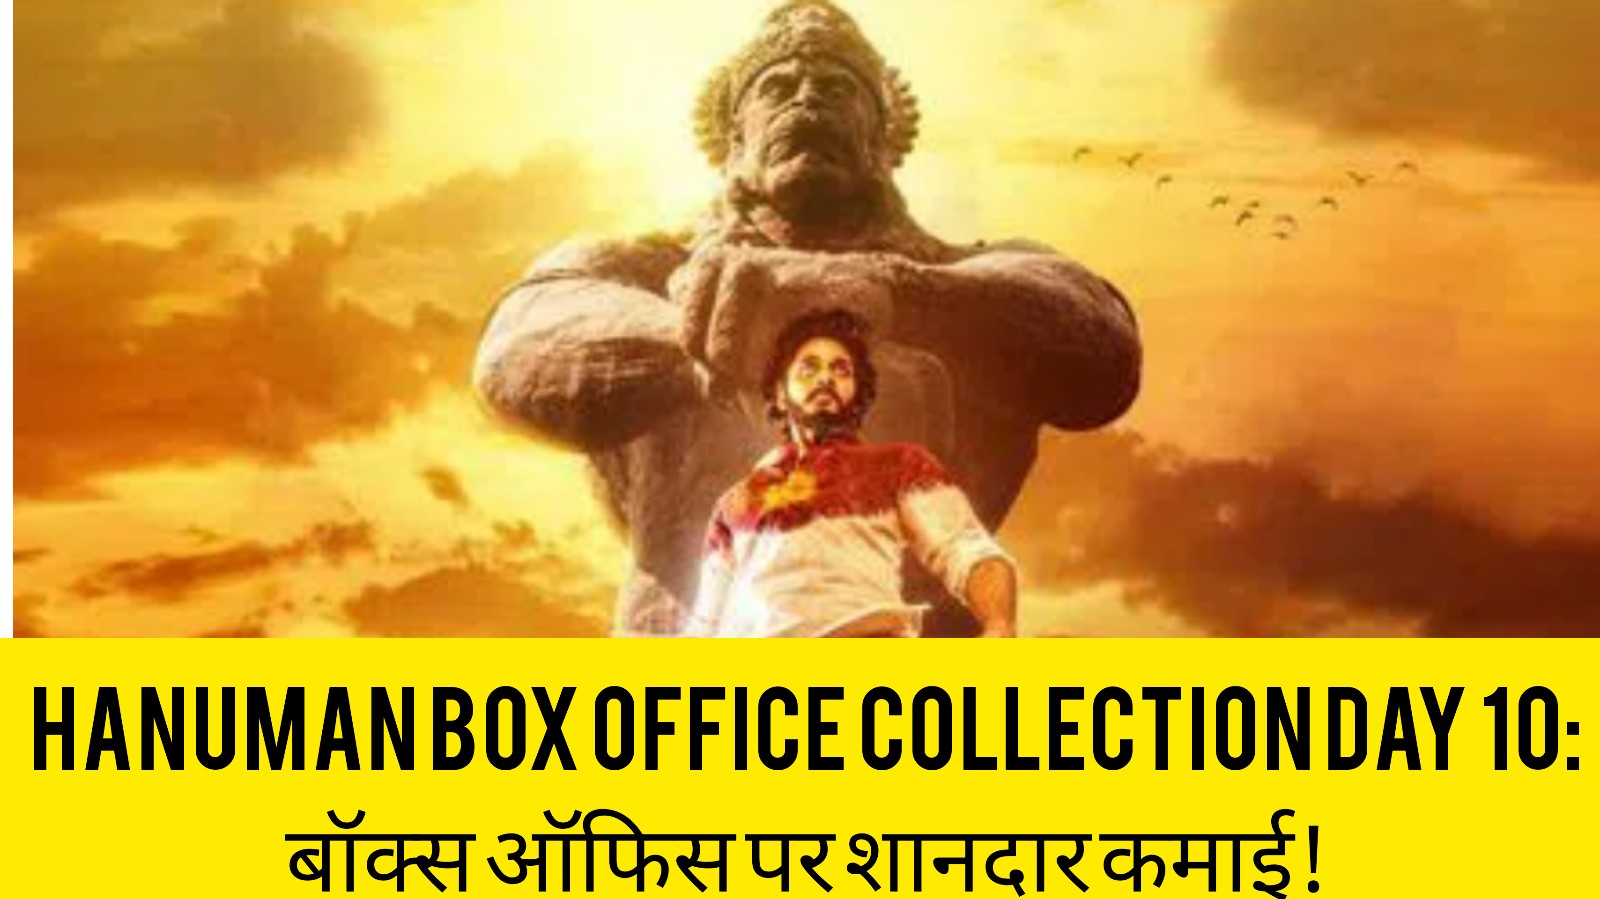 HanuMan Box Office Collection Day 10:बॉक्स ऑफिस पर शानदार कमाई!